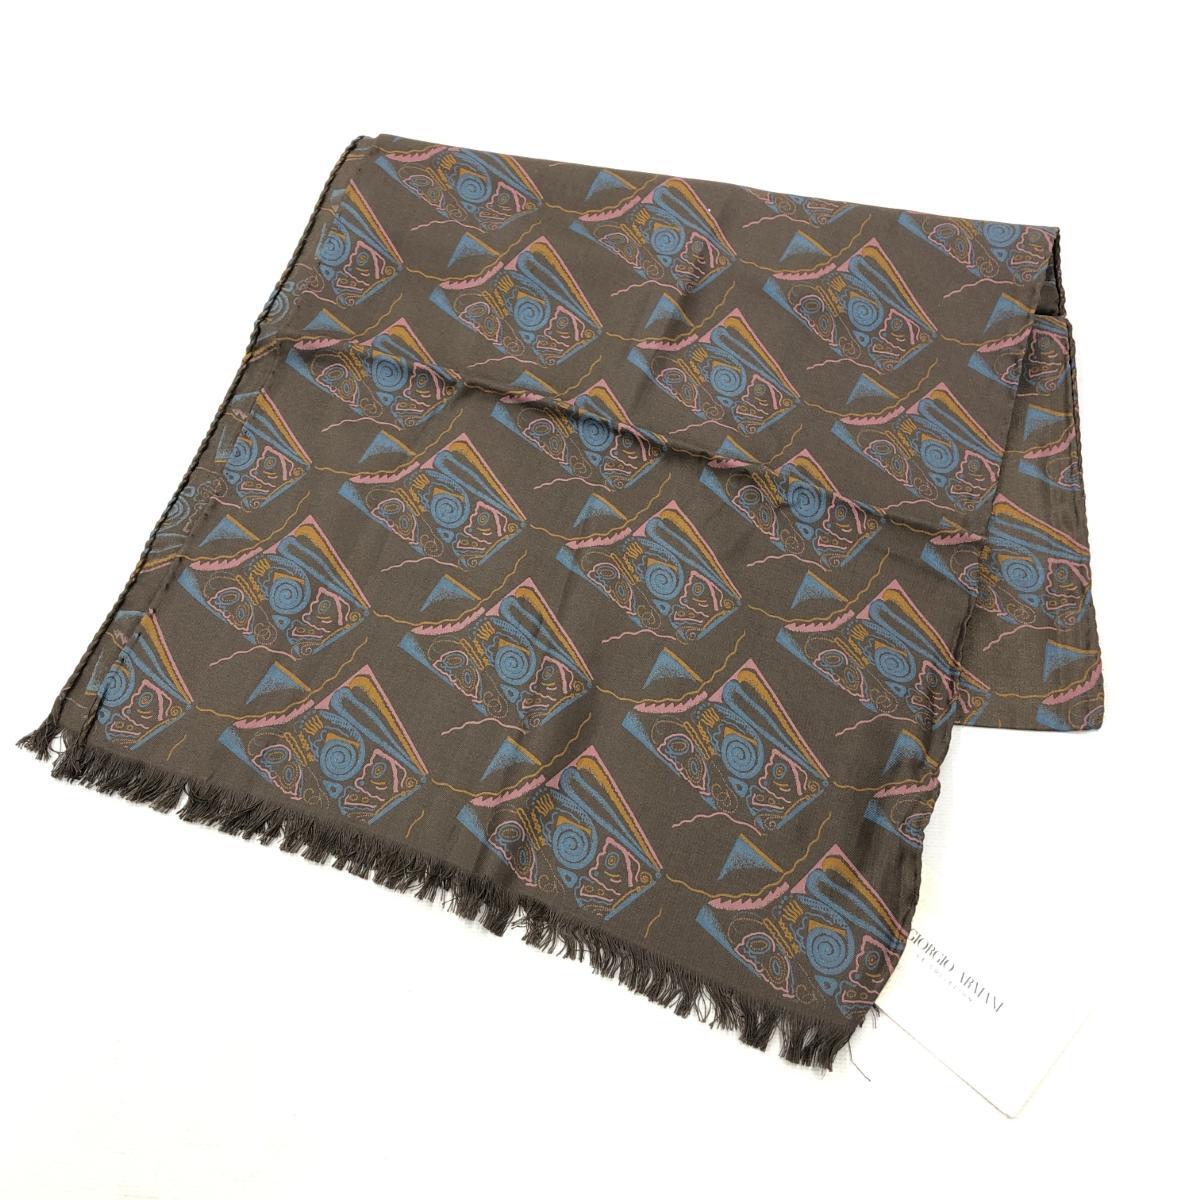  unused goods *GIORGIO ARMANIjoru geo Armani stole * Brown silk 100% total pattern lady's long scarf collar volume clothing accessories 